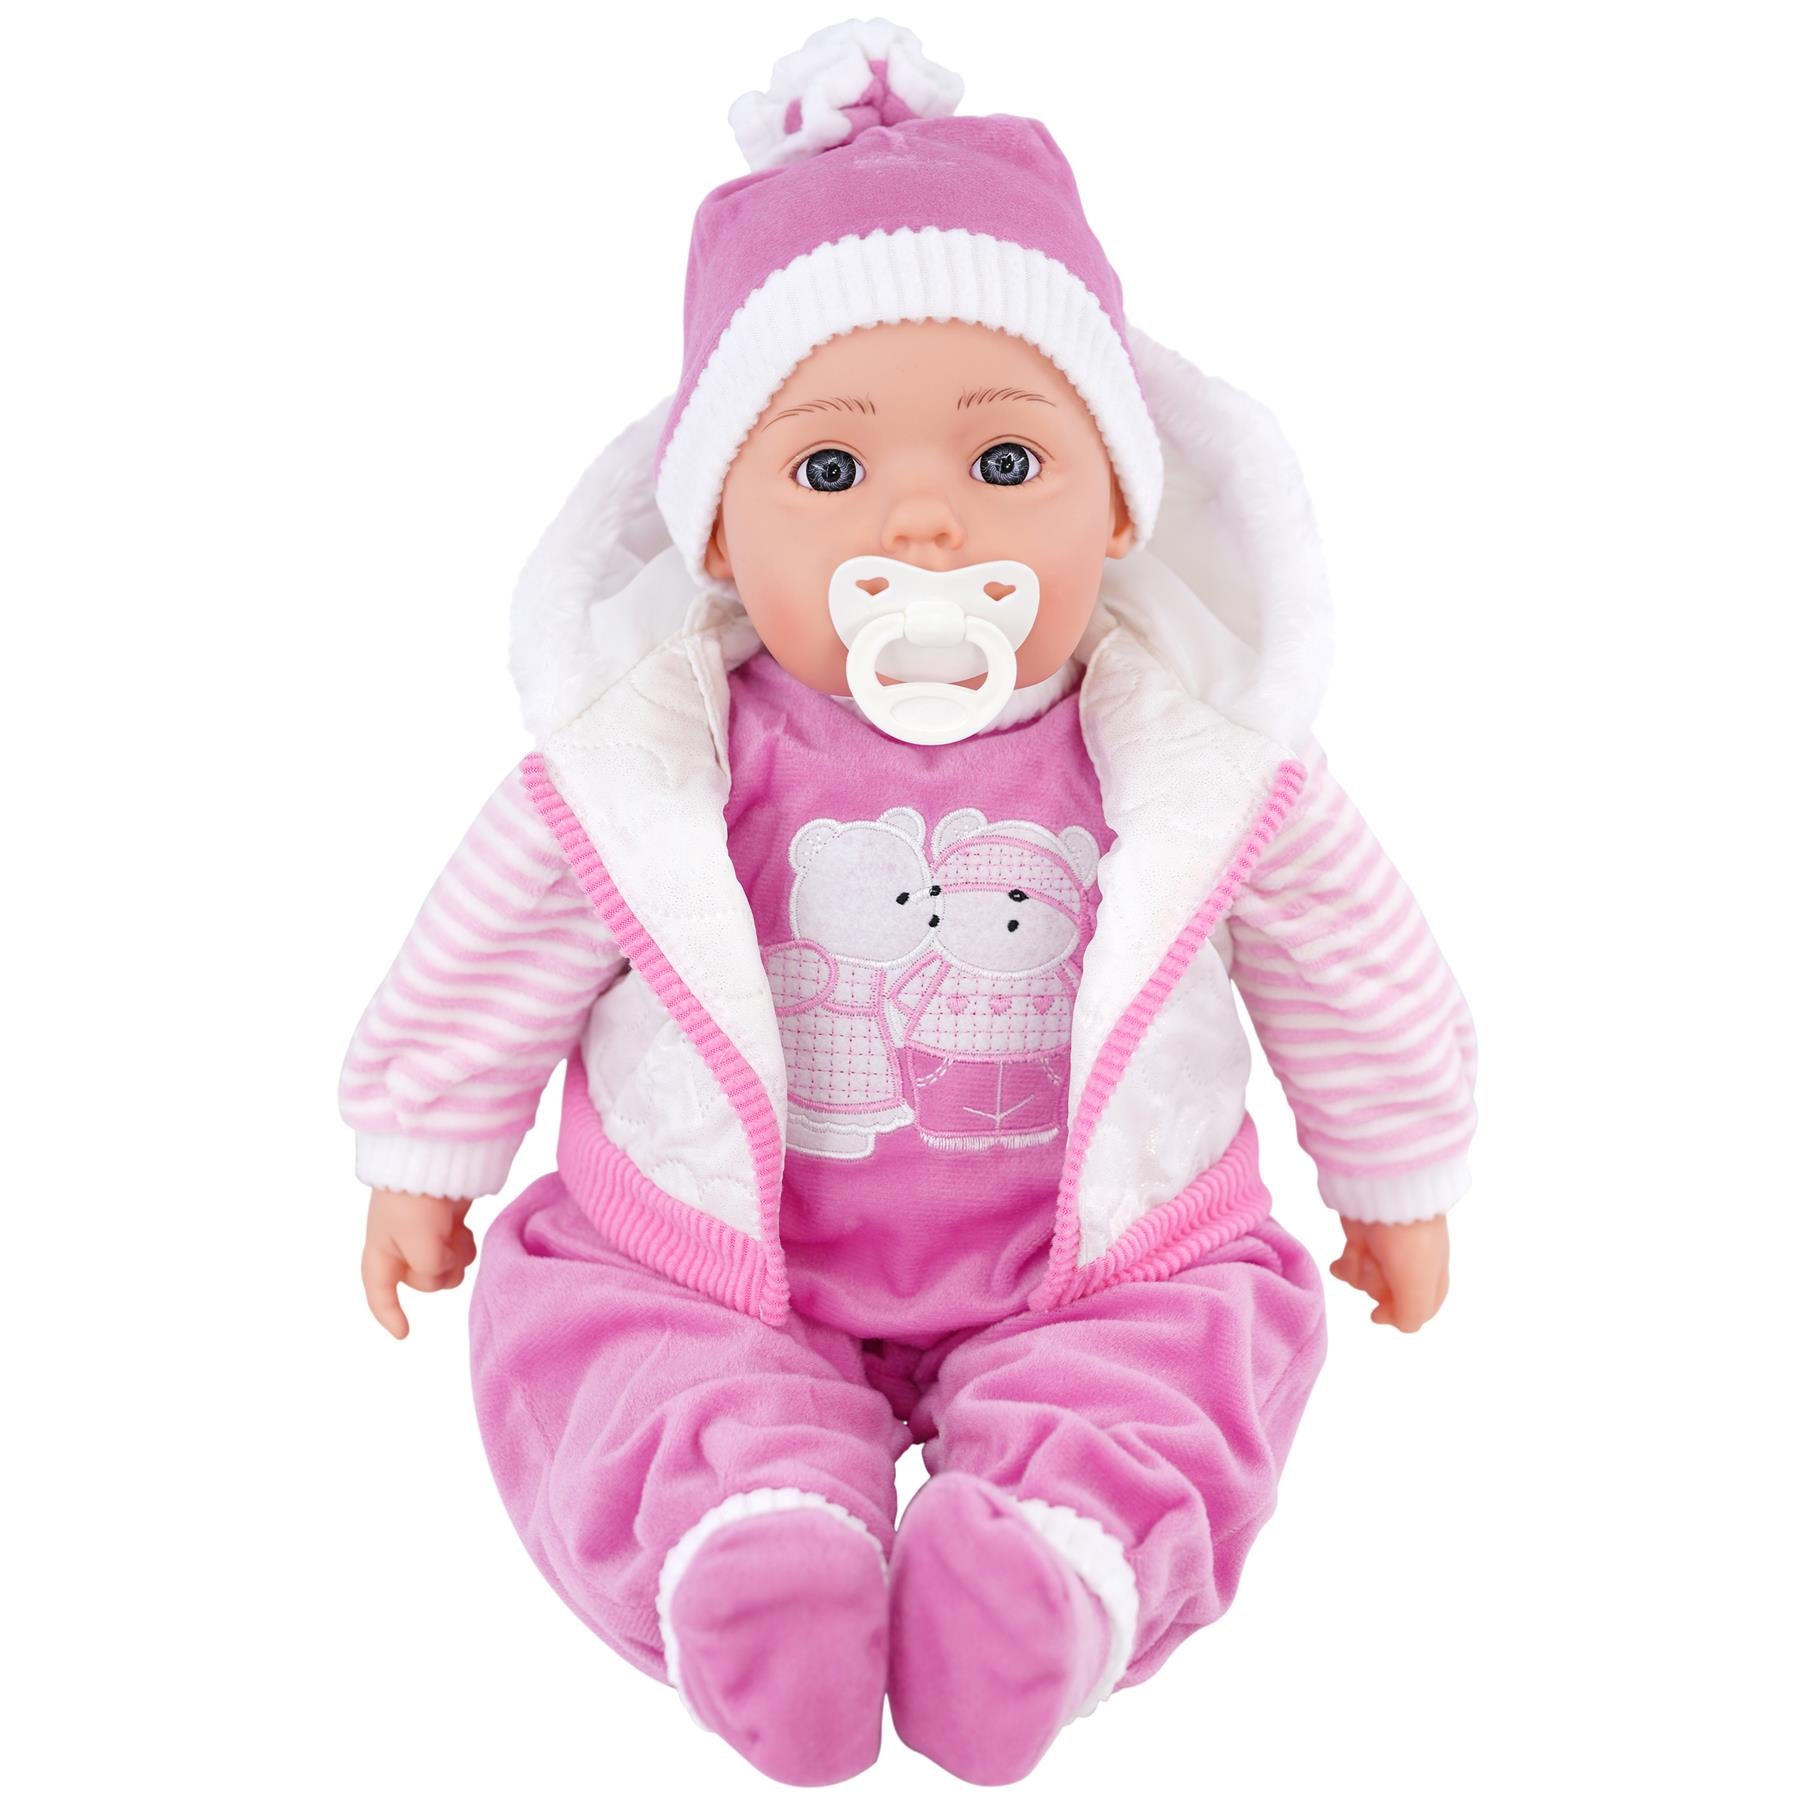 Spotty Coat Bibi Baby Doll Toy With Dummy & Sounds by BiBi DollThe